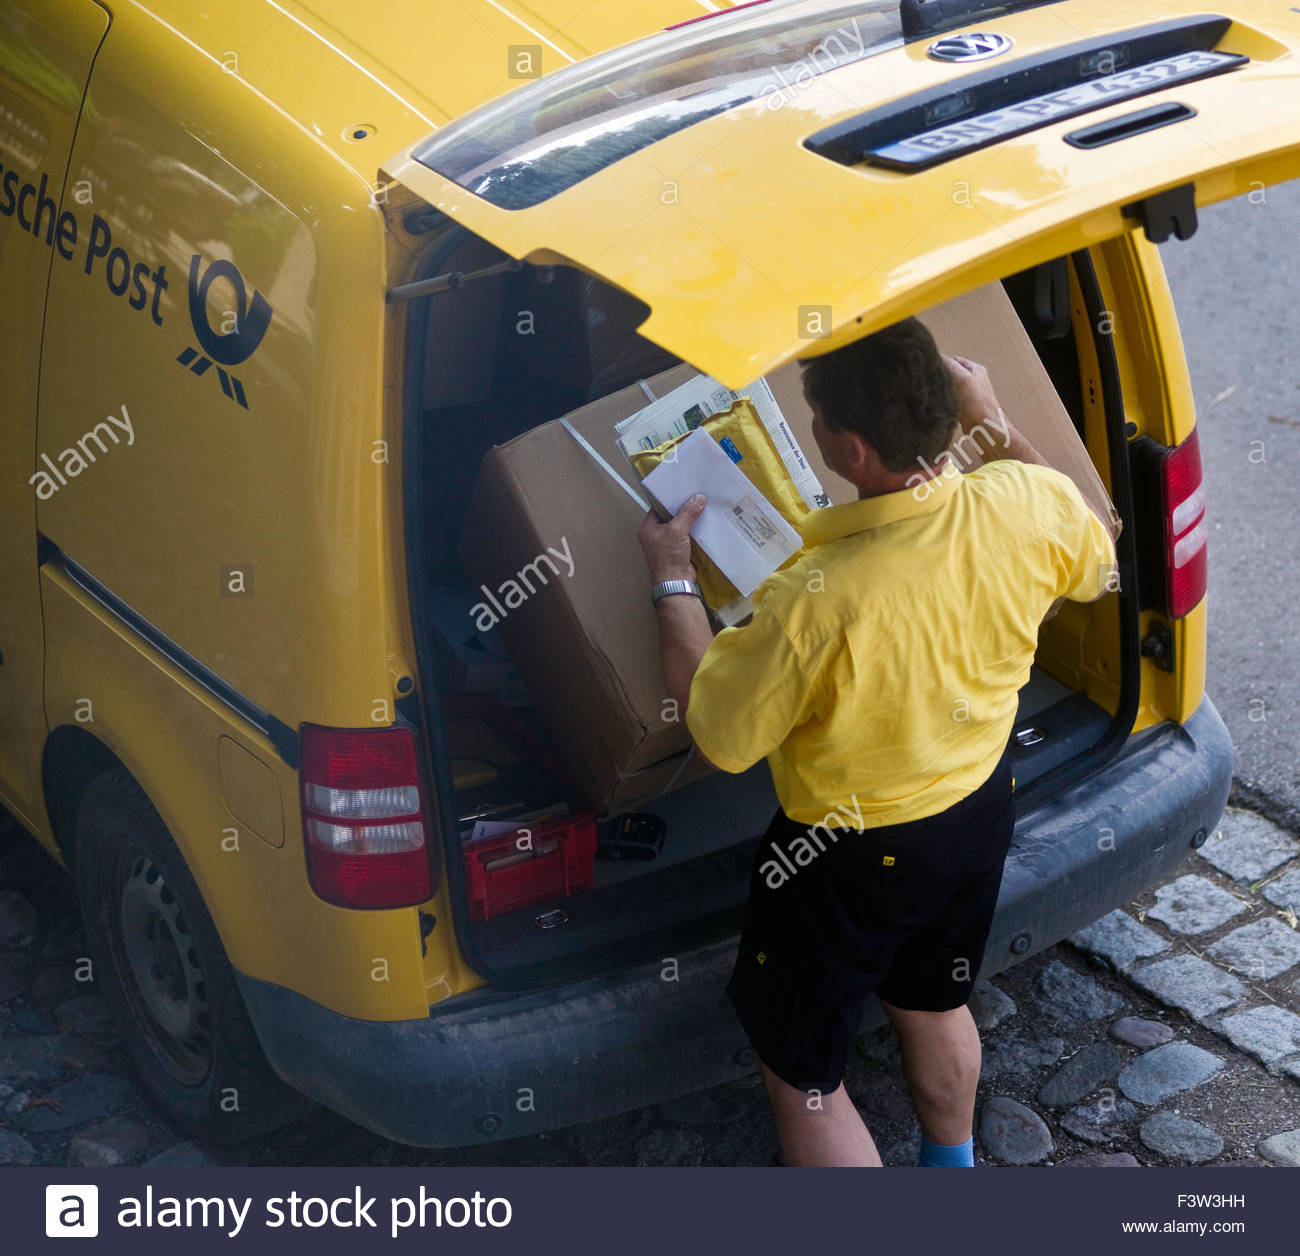 Deutsch Post Postman Delivering Cardboard Box Package Stock Photo Alamy